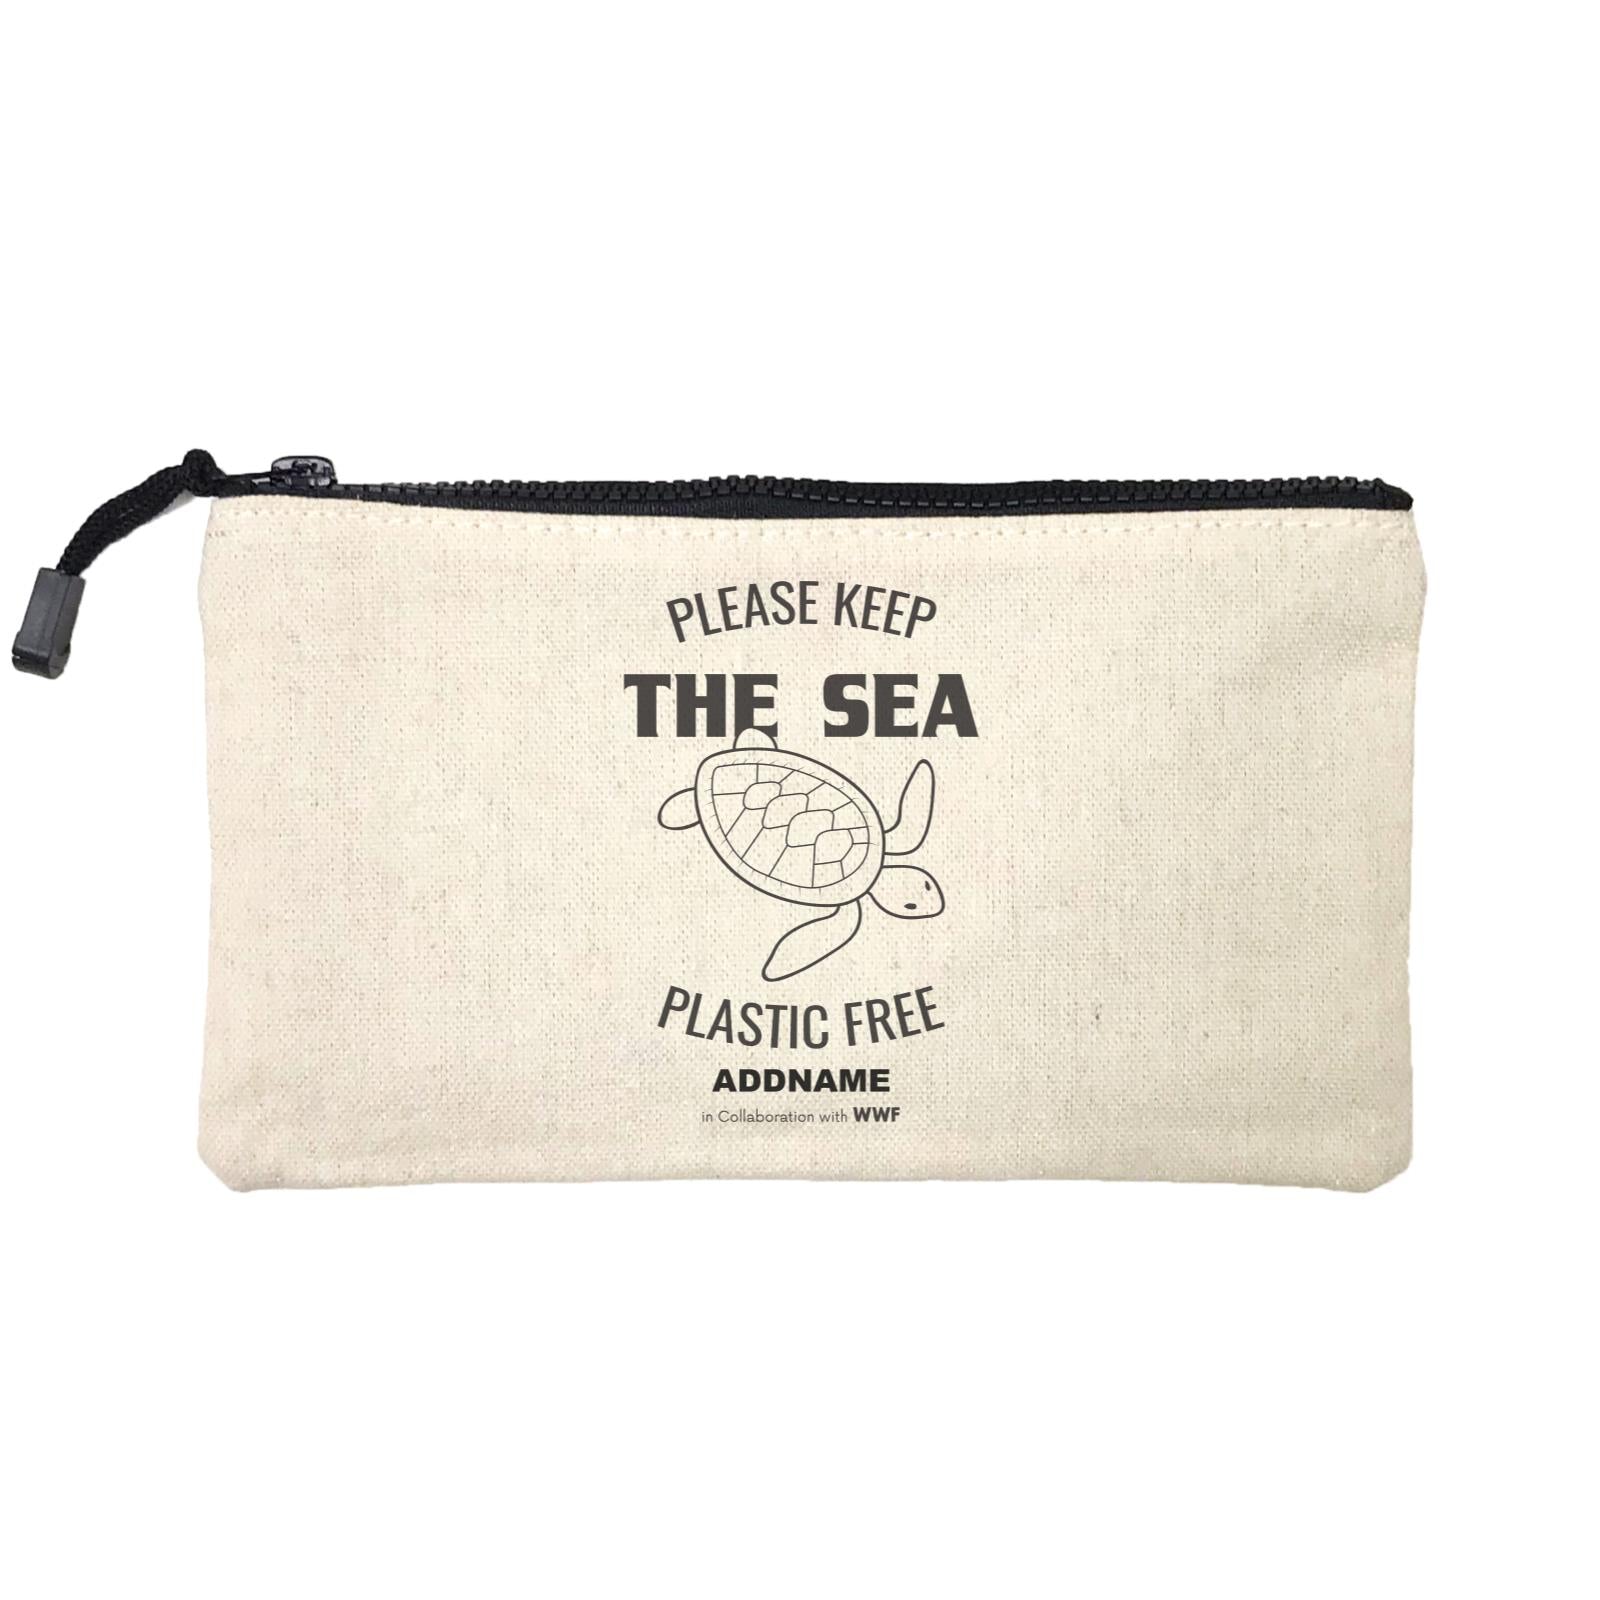 Please Keep The Sea Plastic Free Turtle Monochrome Addname Mini Accessories Stationery Pouch